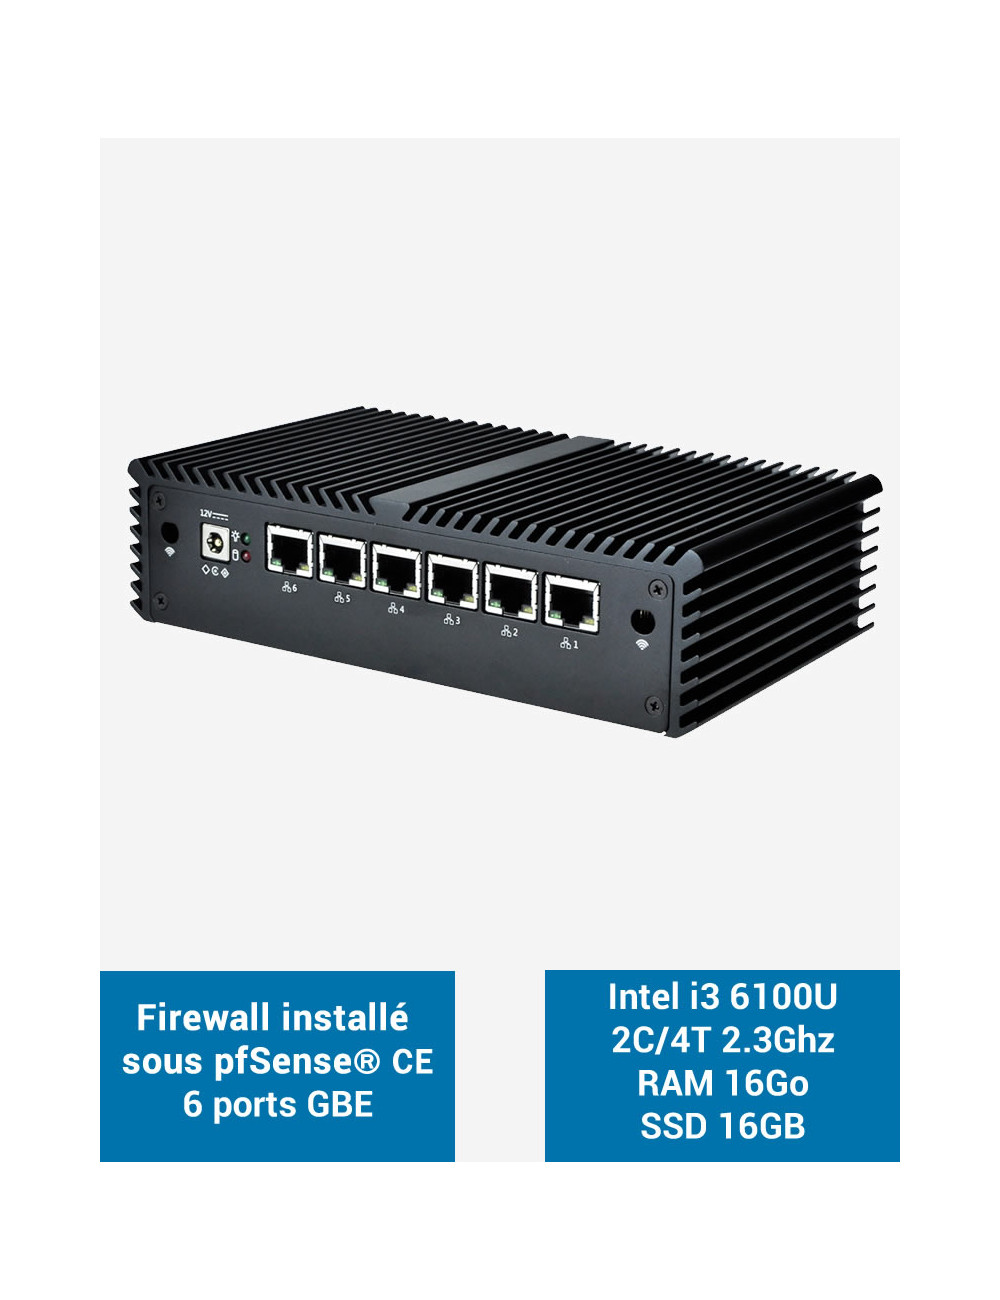 Firewall pfSense® Q5x Intel i3 6100U 6 ports Gigabit 16Go SSD 16Go